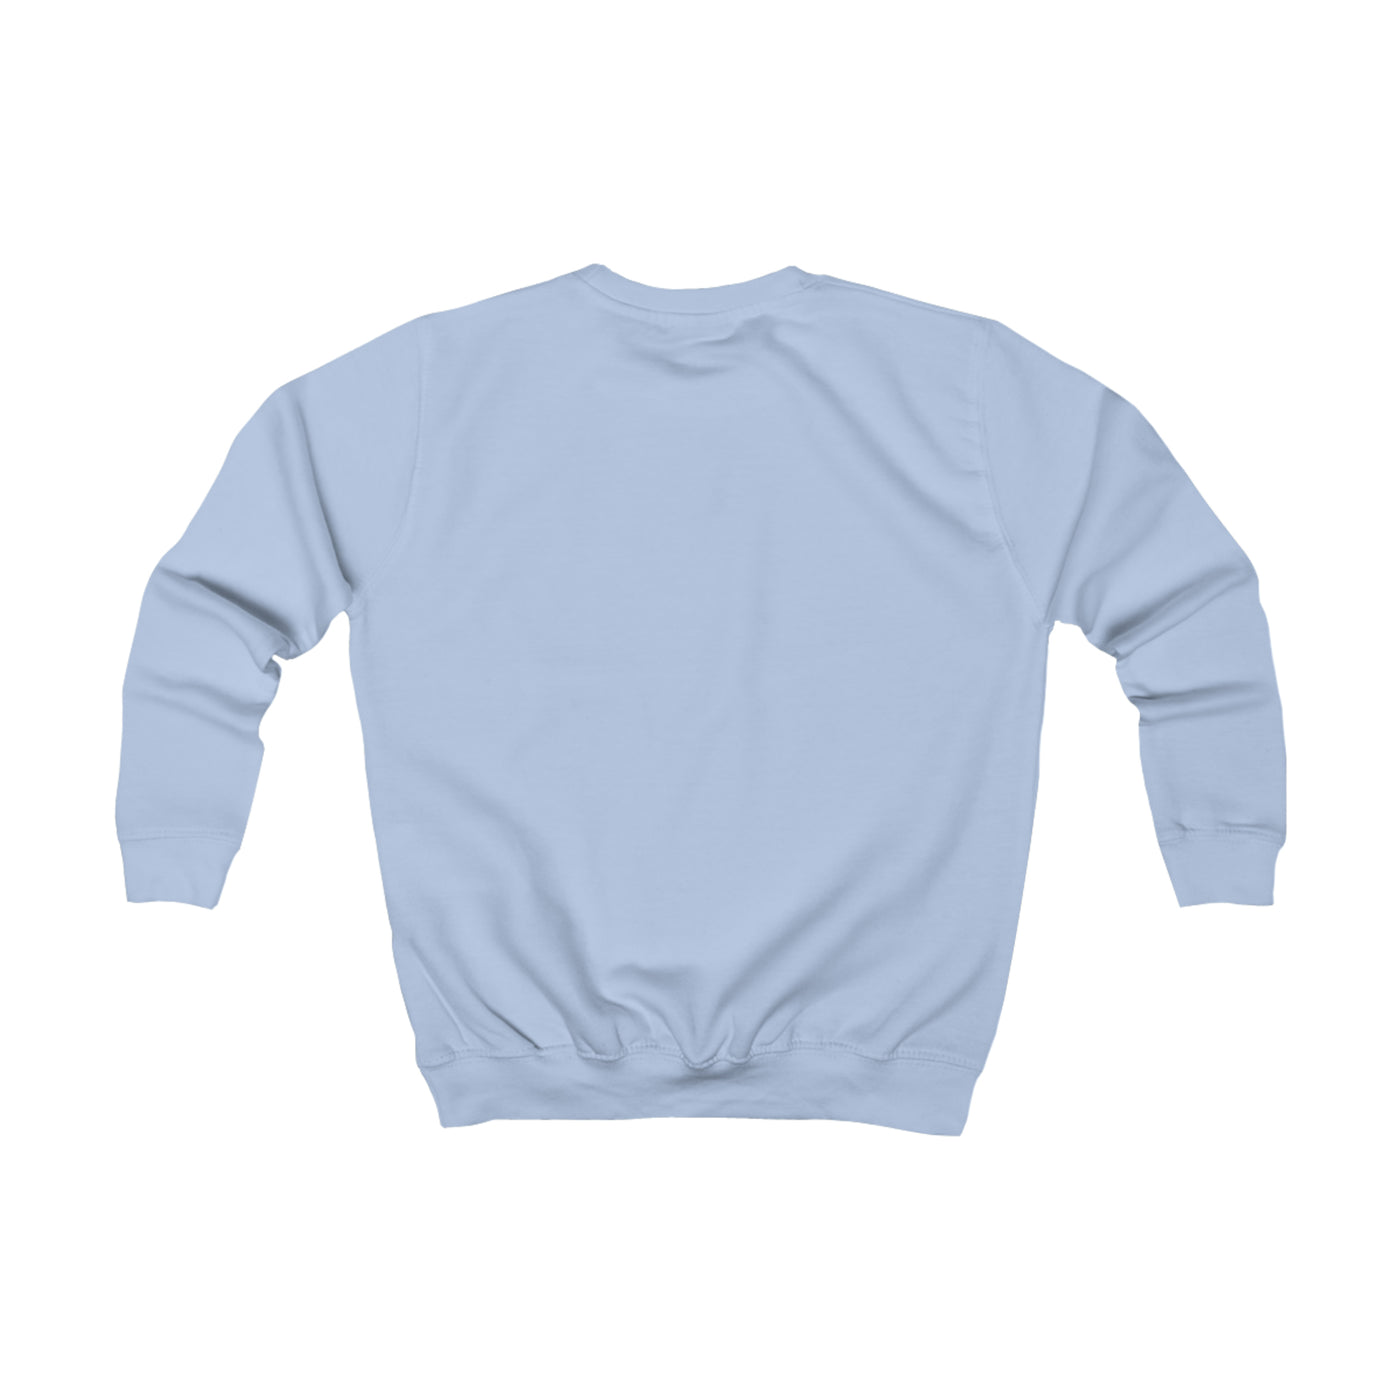 Dream Big Sweatshirt - Mocha